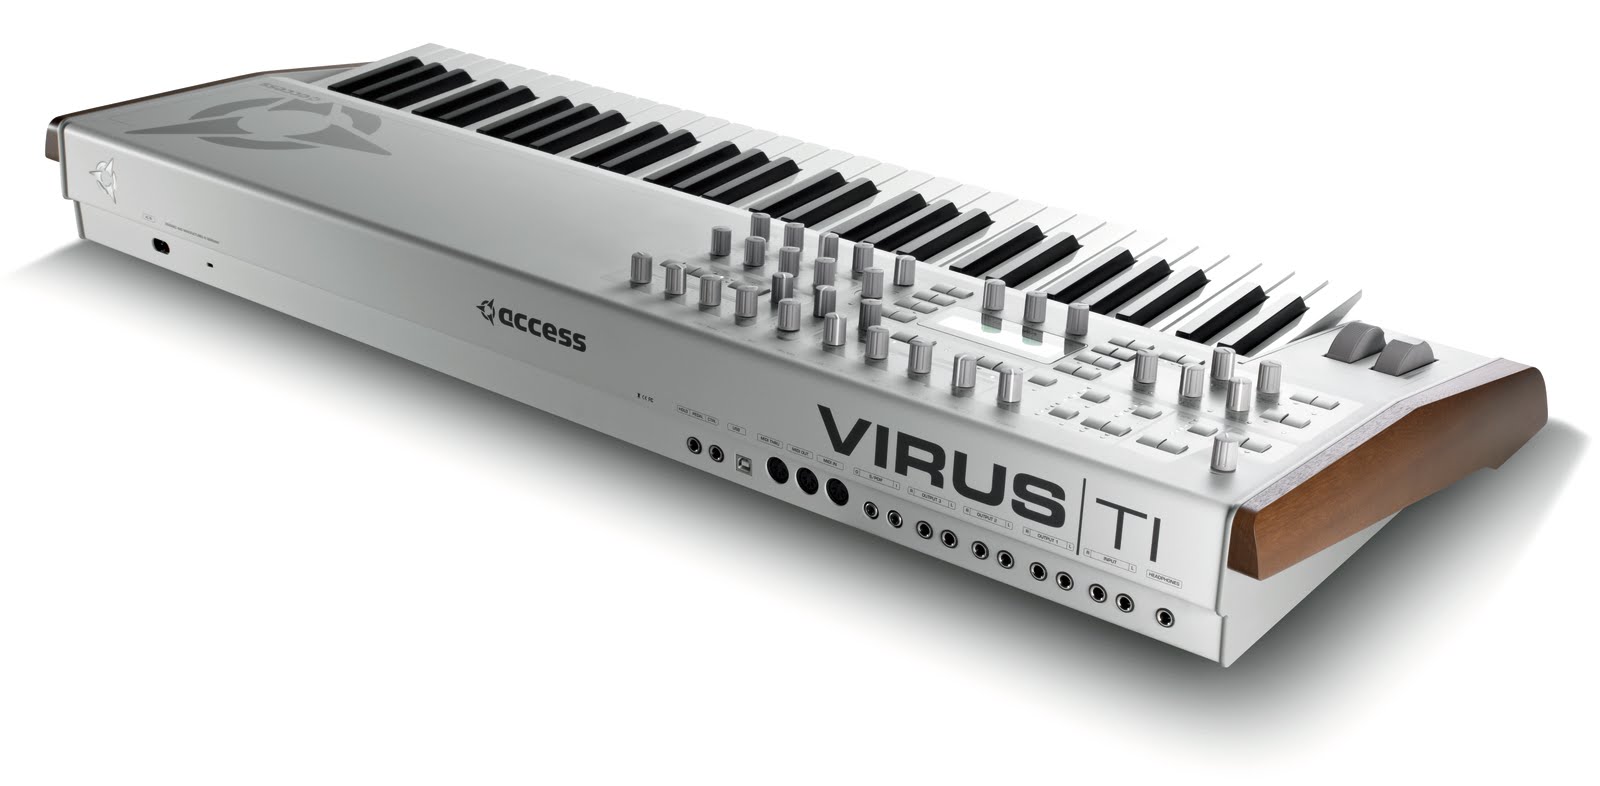 Virus ti. Nexus2 access virus Whiteout Edition. Access virus ti 2 VST. Access virus ti2 Keyboard. Access virus ti2 в РЭК стойку.